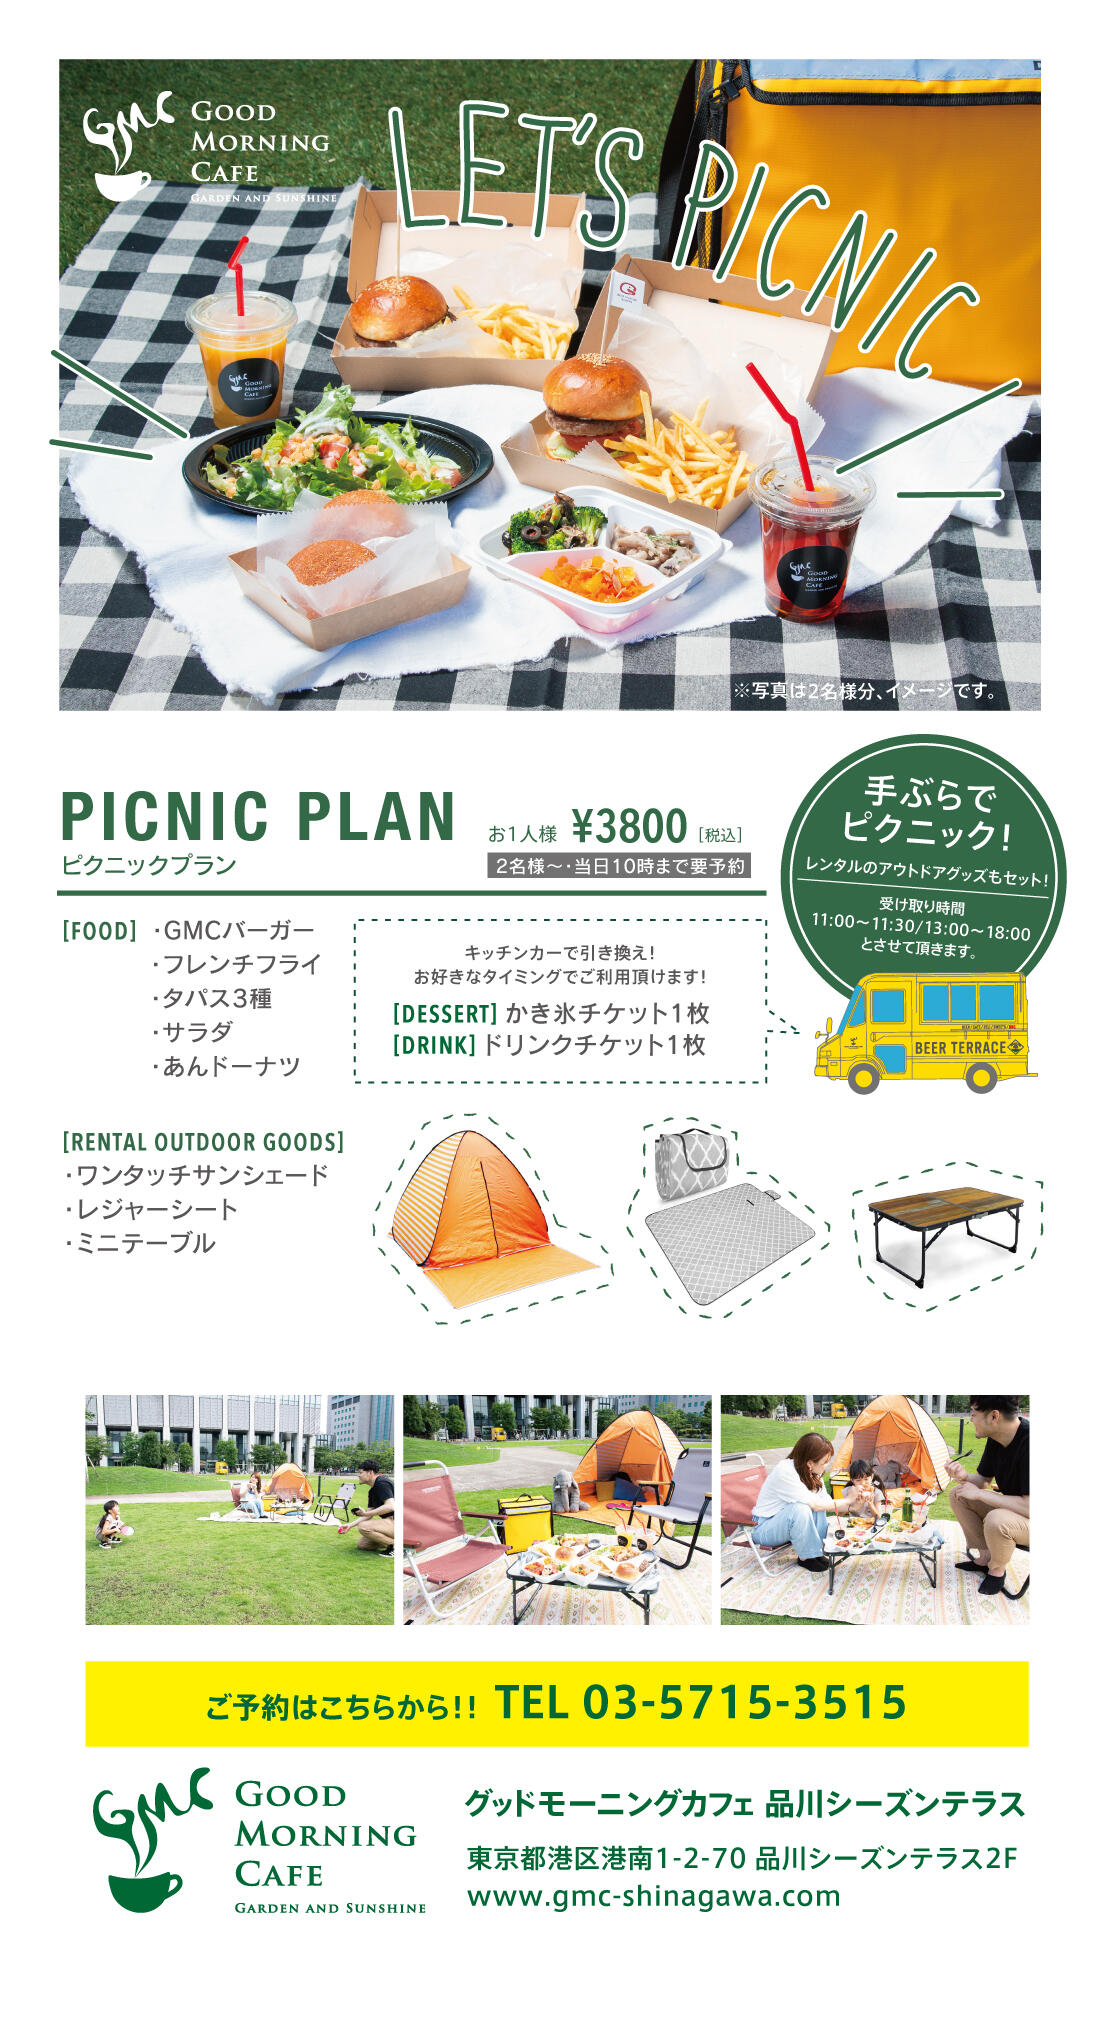 gmcsi_220301_picnic_web_main.jpg